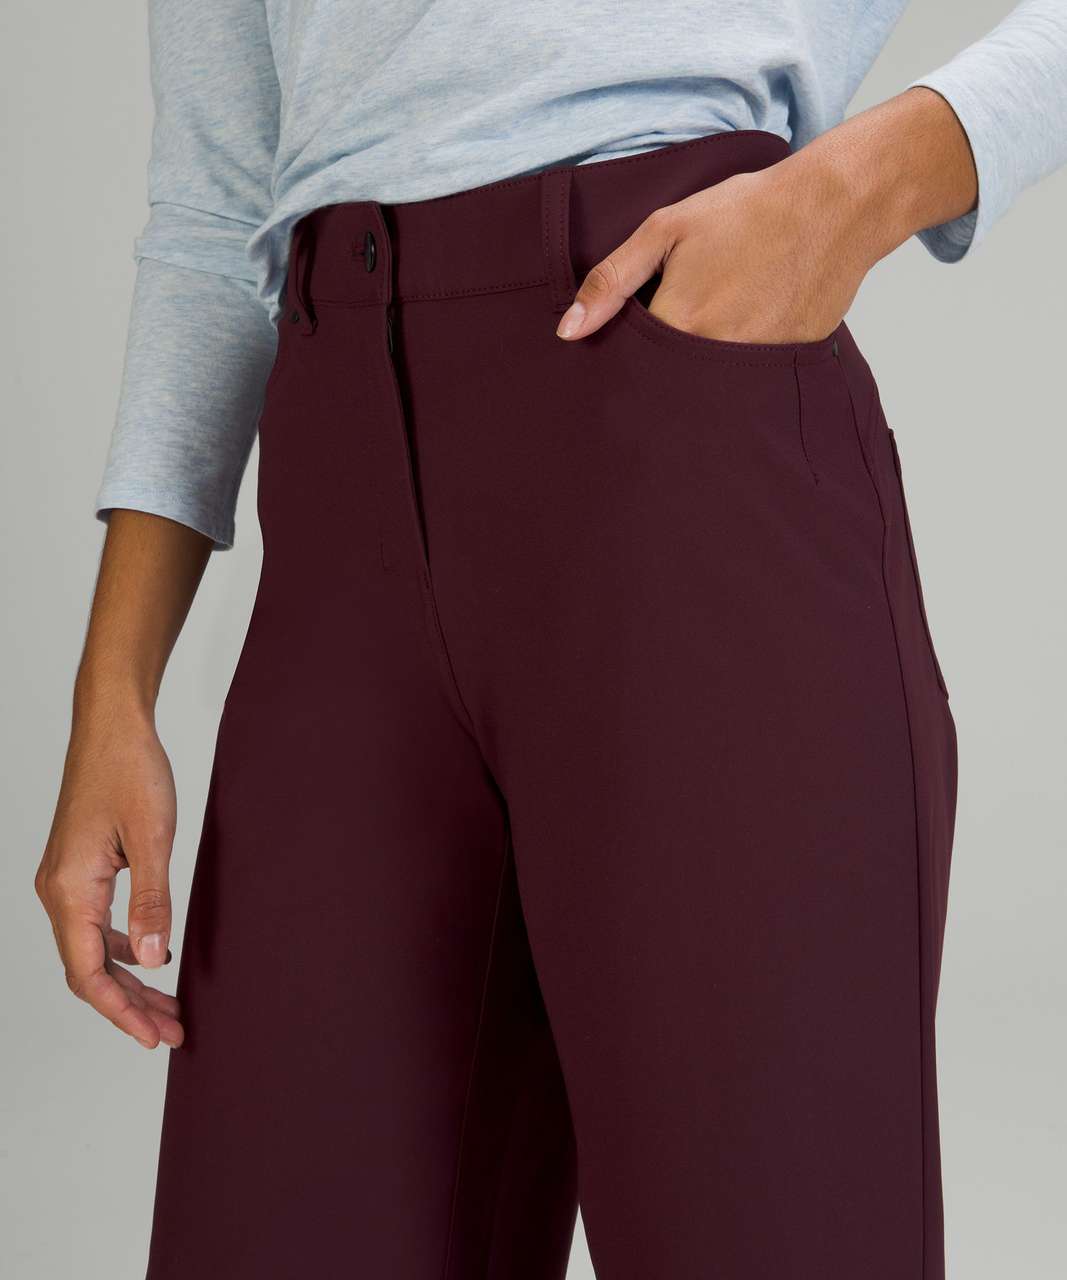 Lululemon City Sleek 5 Pocket Wide Leg Pant - Cassis